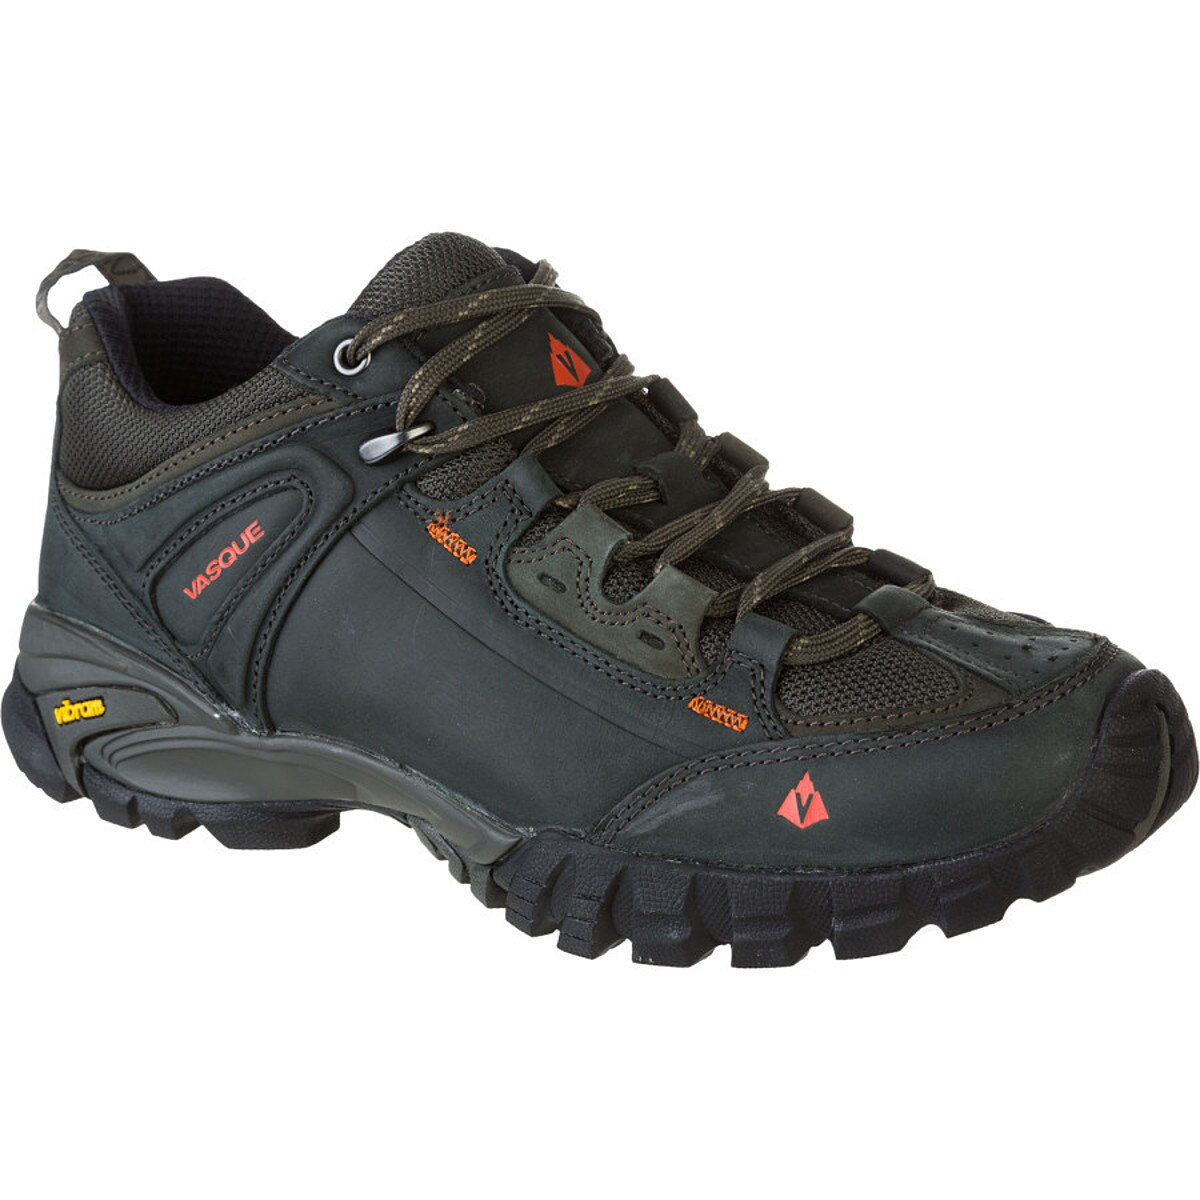 Vasque Mantra 2.0 Hiking Shoe - Men's | eBay